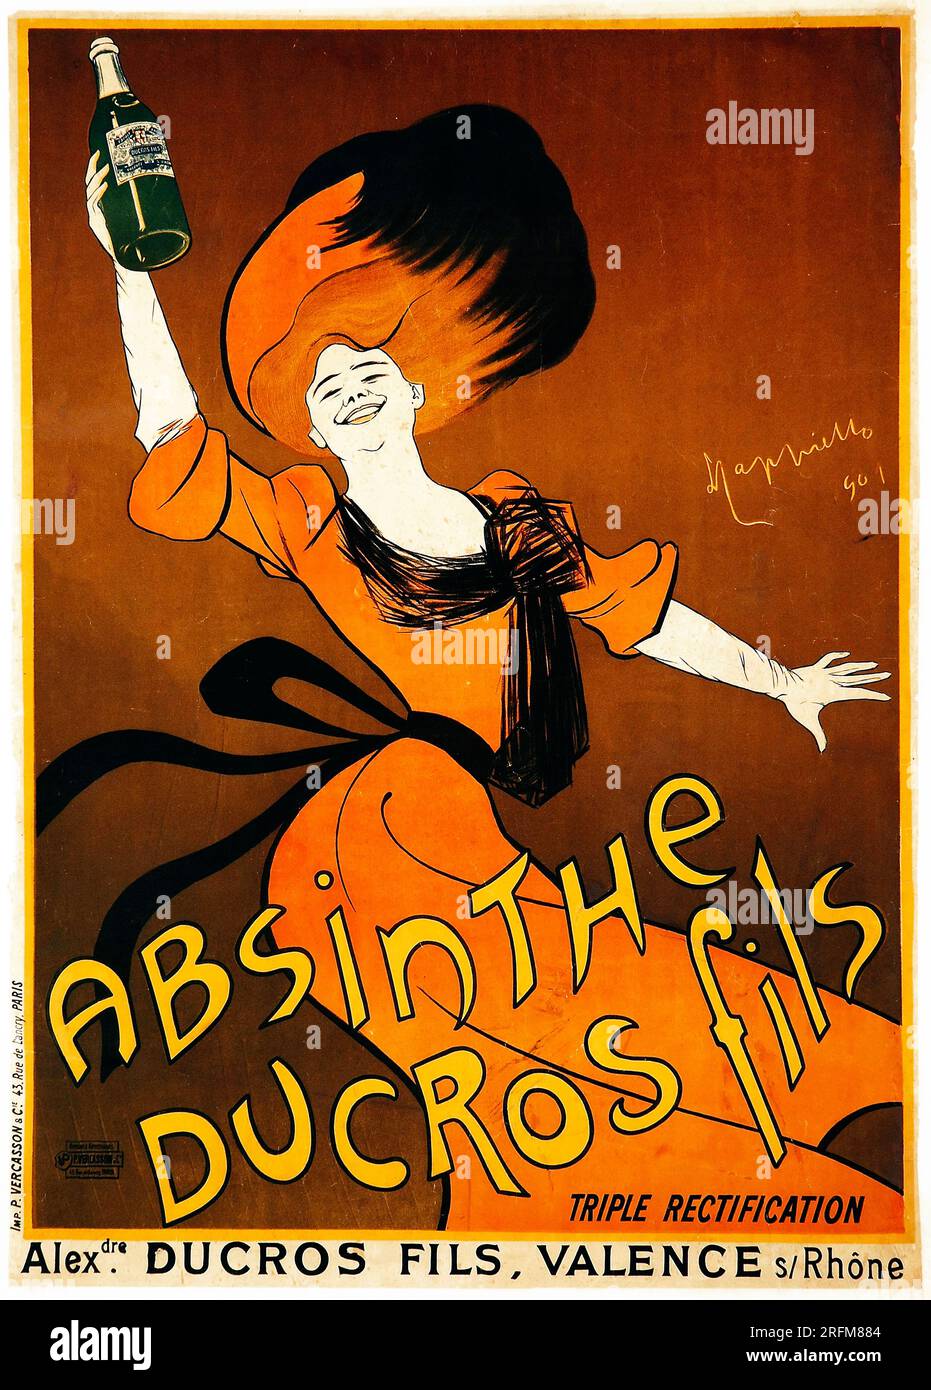 Absinthe Ducros fils... Alex. Ducros fils, Valence - Leonetto Cappiello artwork, alcohol advertising, 1901 Stock Photo